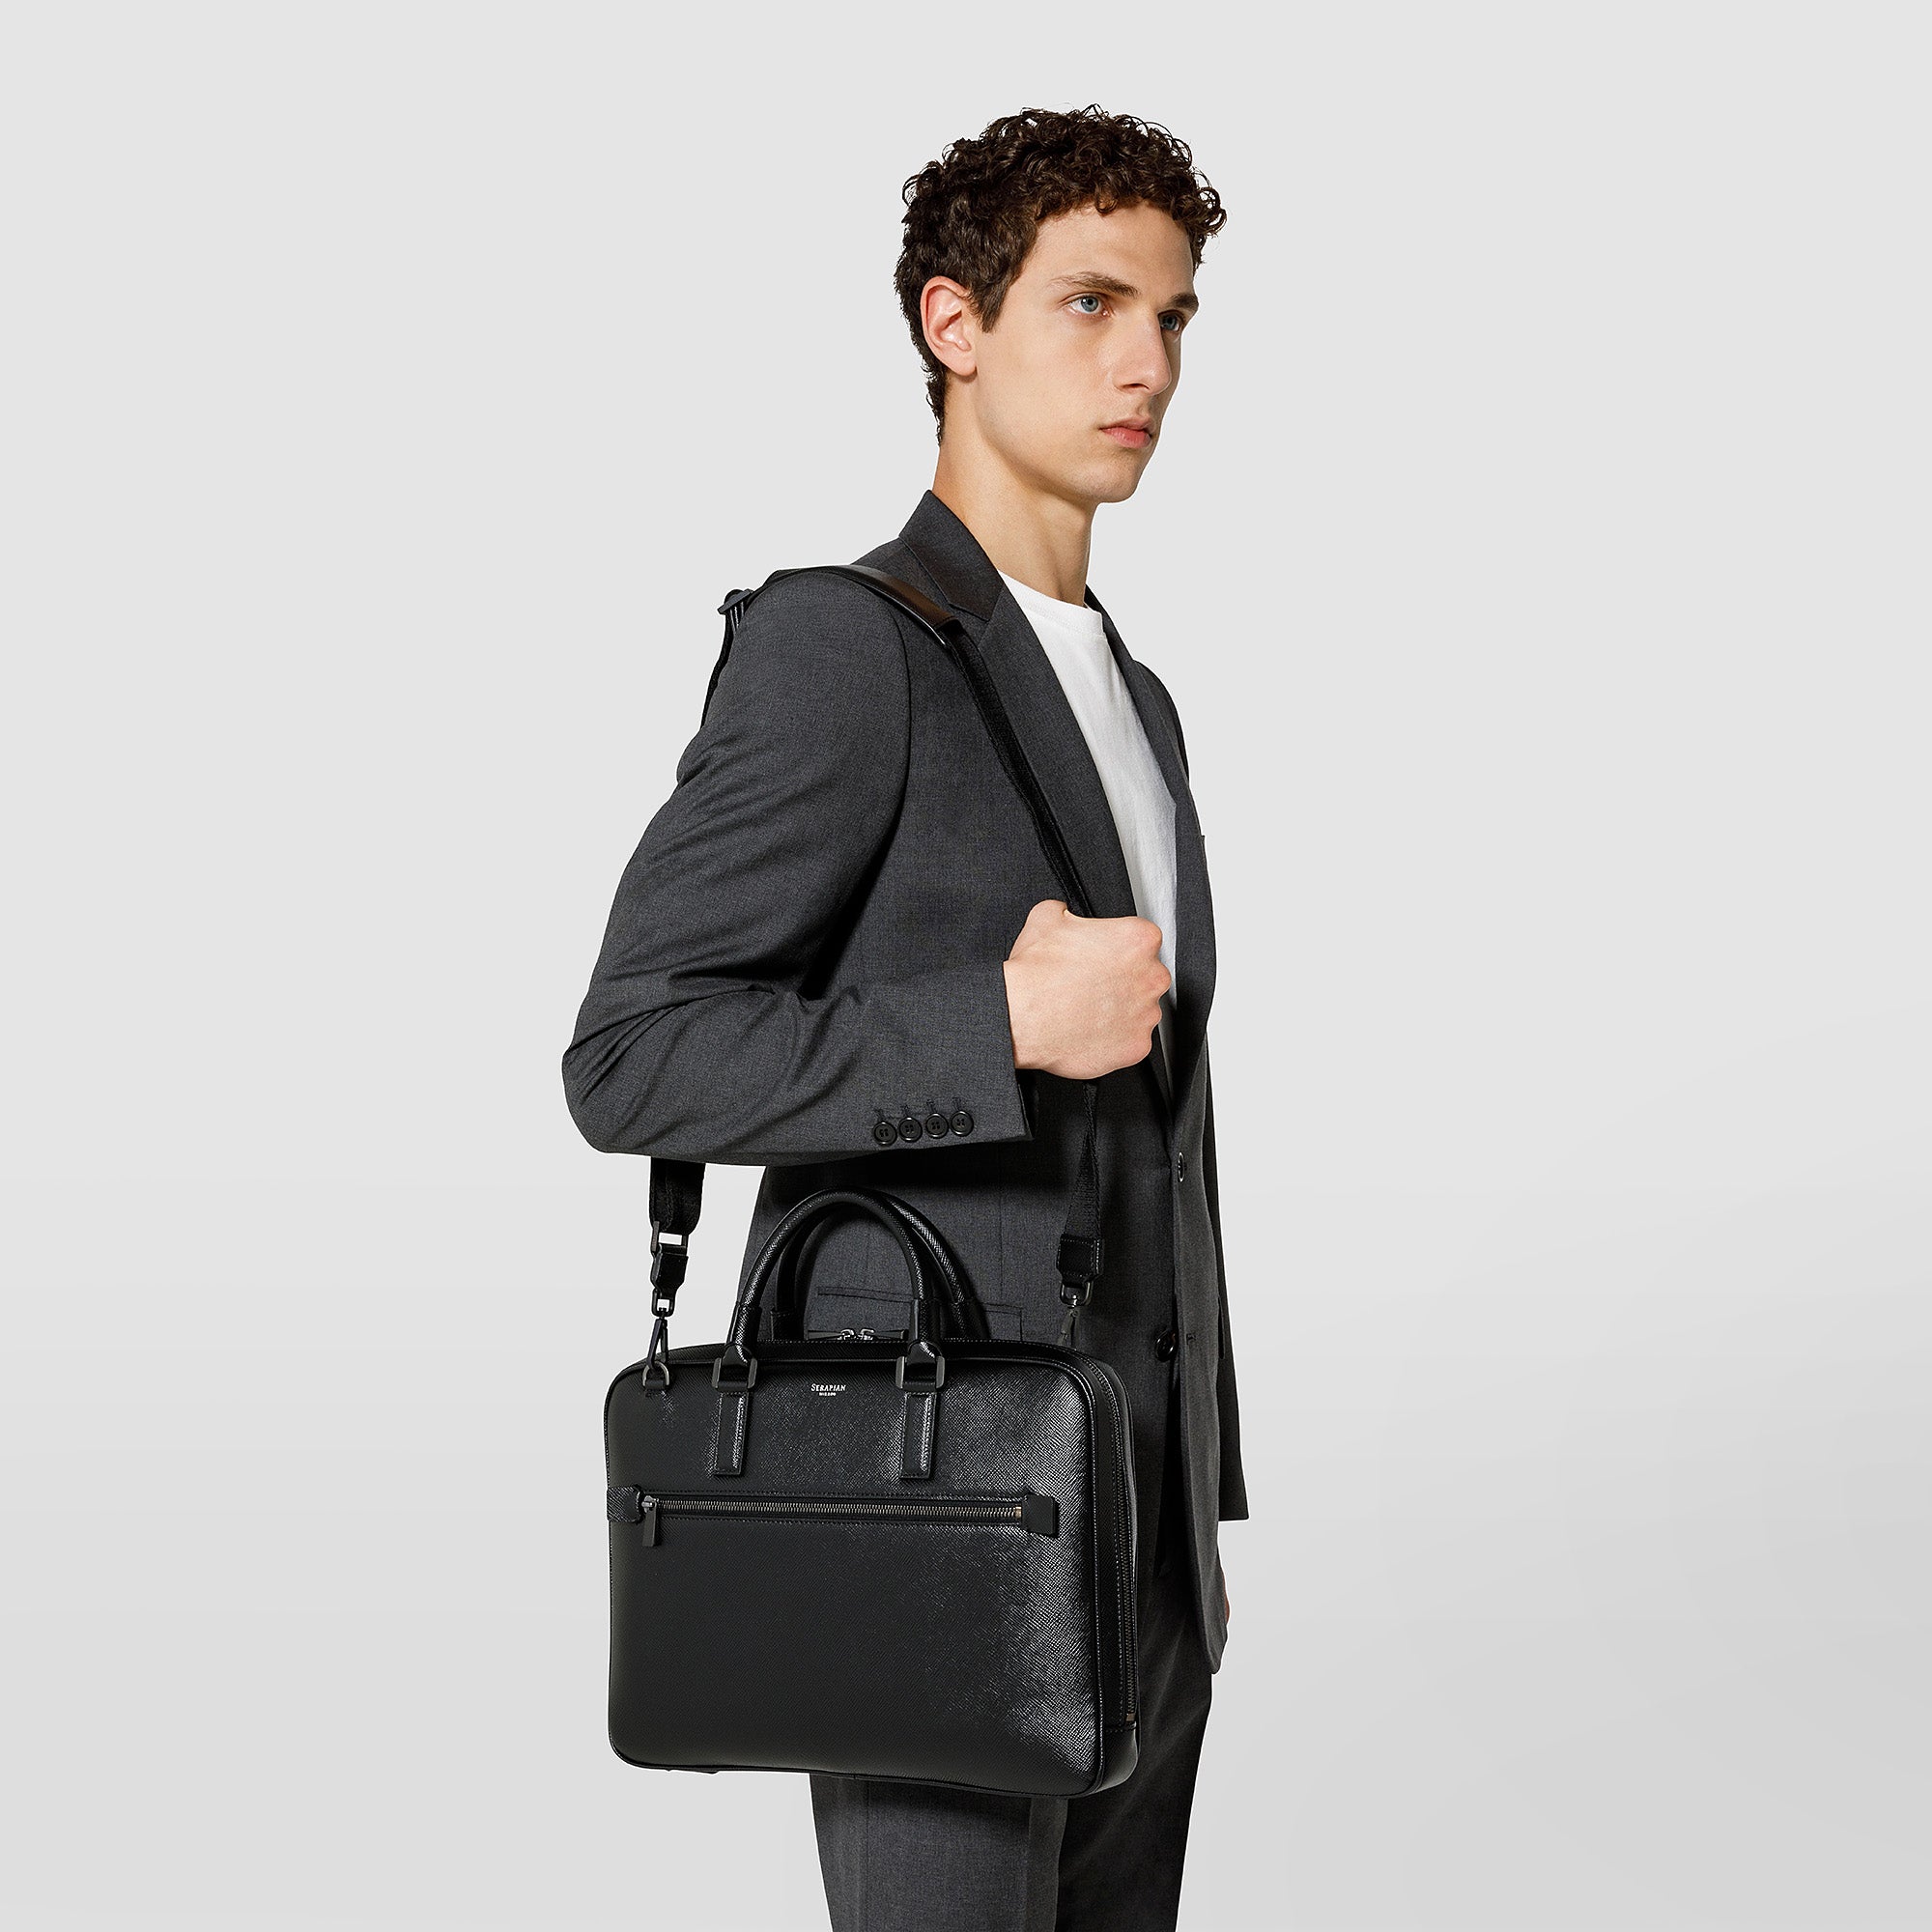 Extra slim briefcase in evoluzione leather eclipse black 